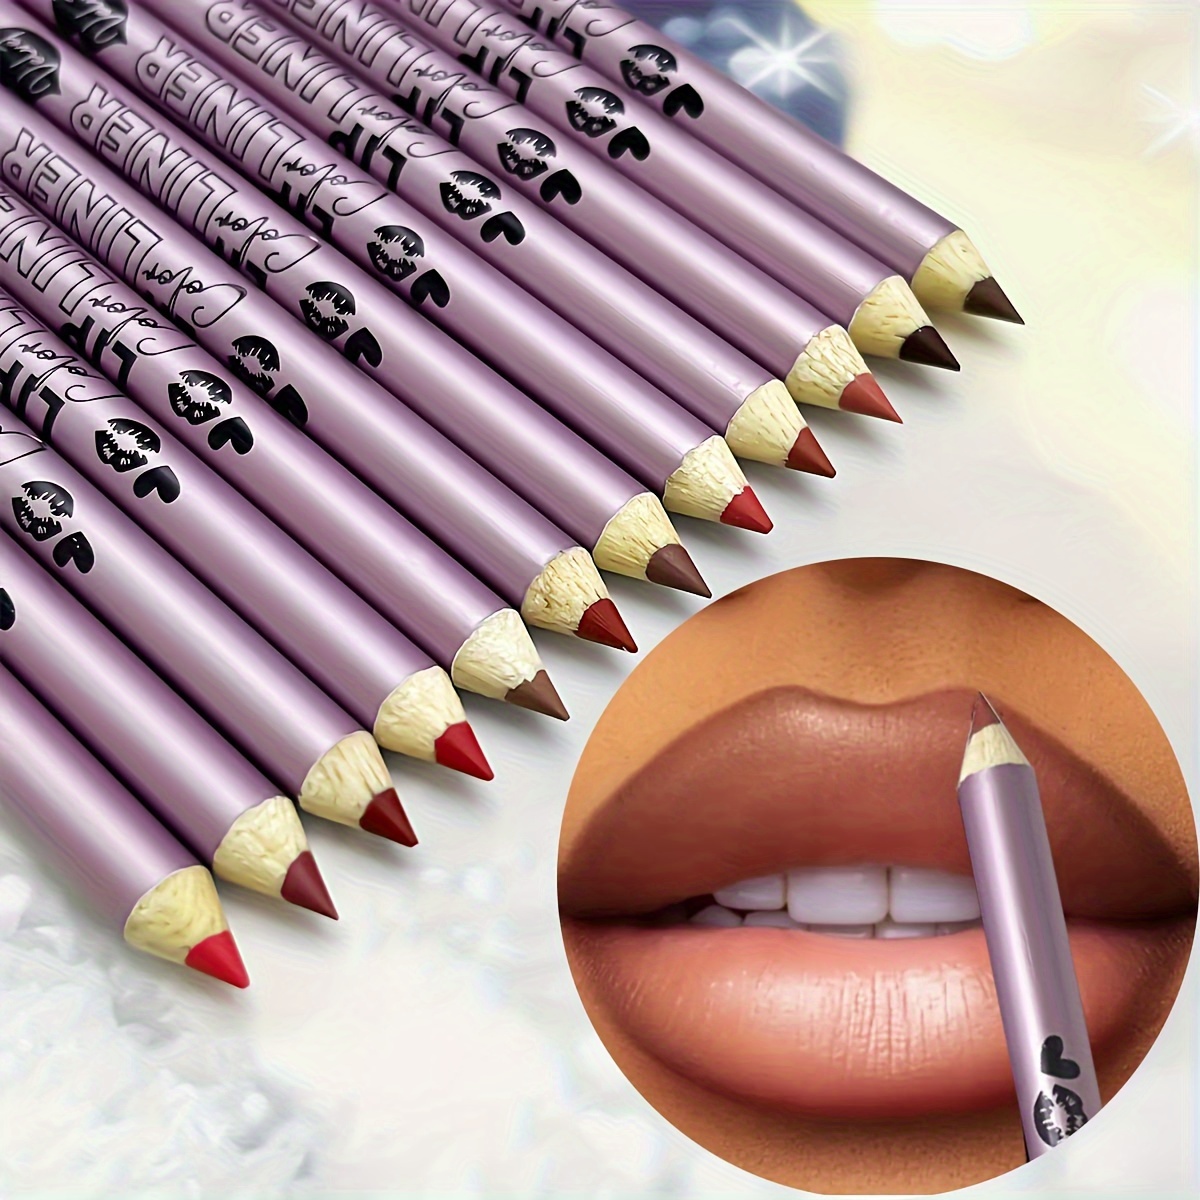 

12pcs Matte Lip Liner Pencils, Long-lasting Velvet Lip Liners, 12 Nude Shades For Lips Contouring, Smooth Application, Makeup Artist Essentials